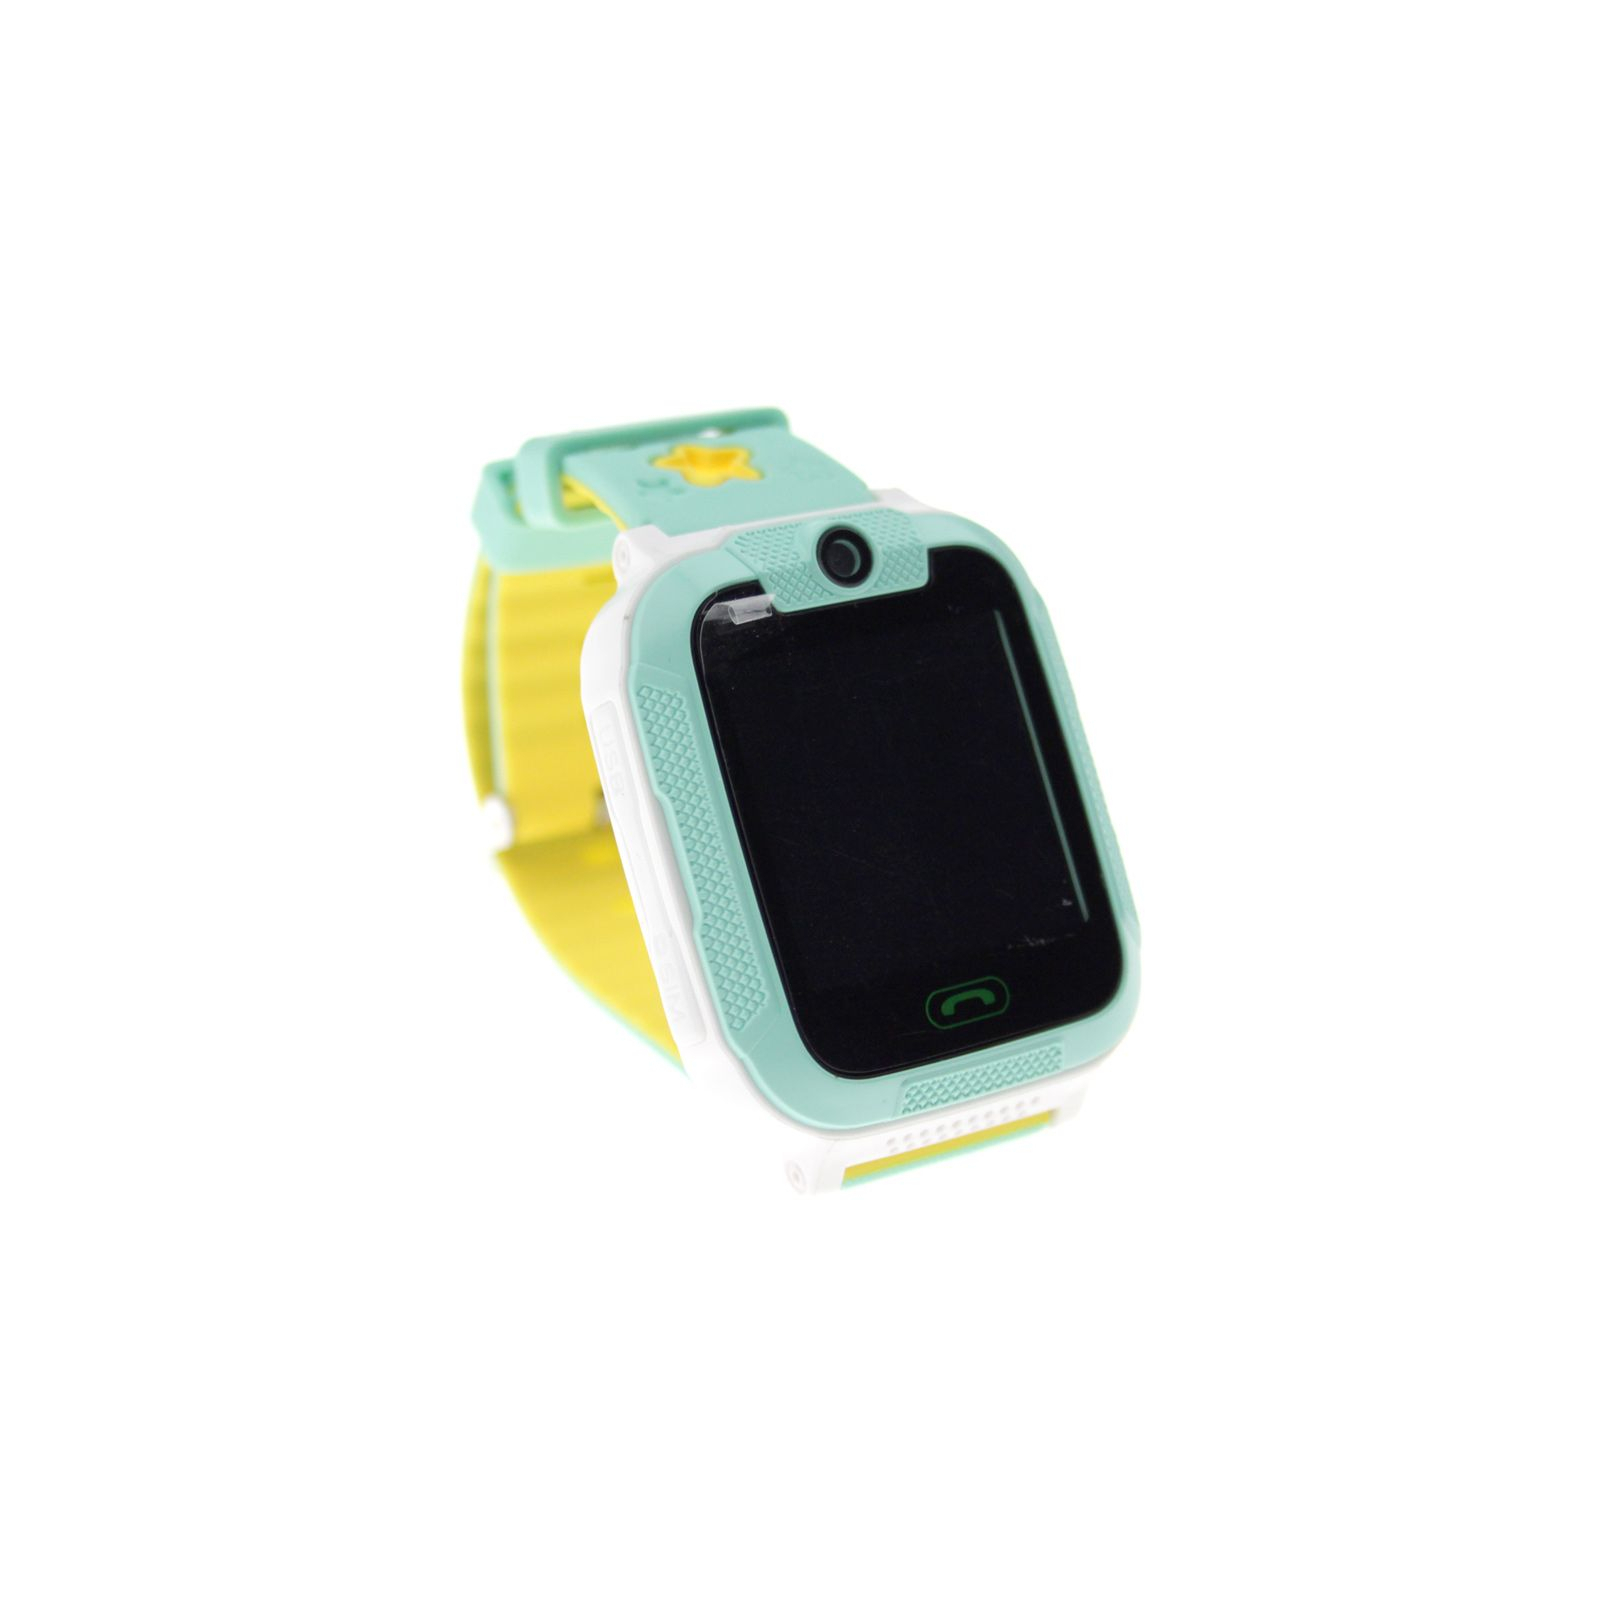 Смарт-часы UWatch G302 Kid smart watch Blue (F_53950) изображение 2